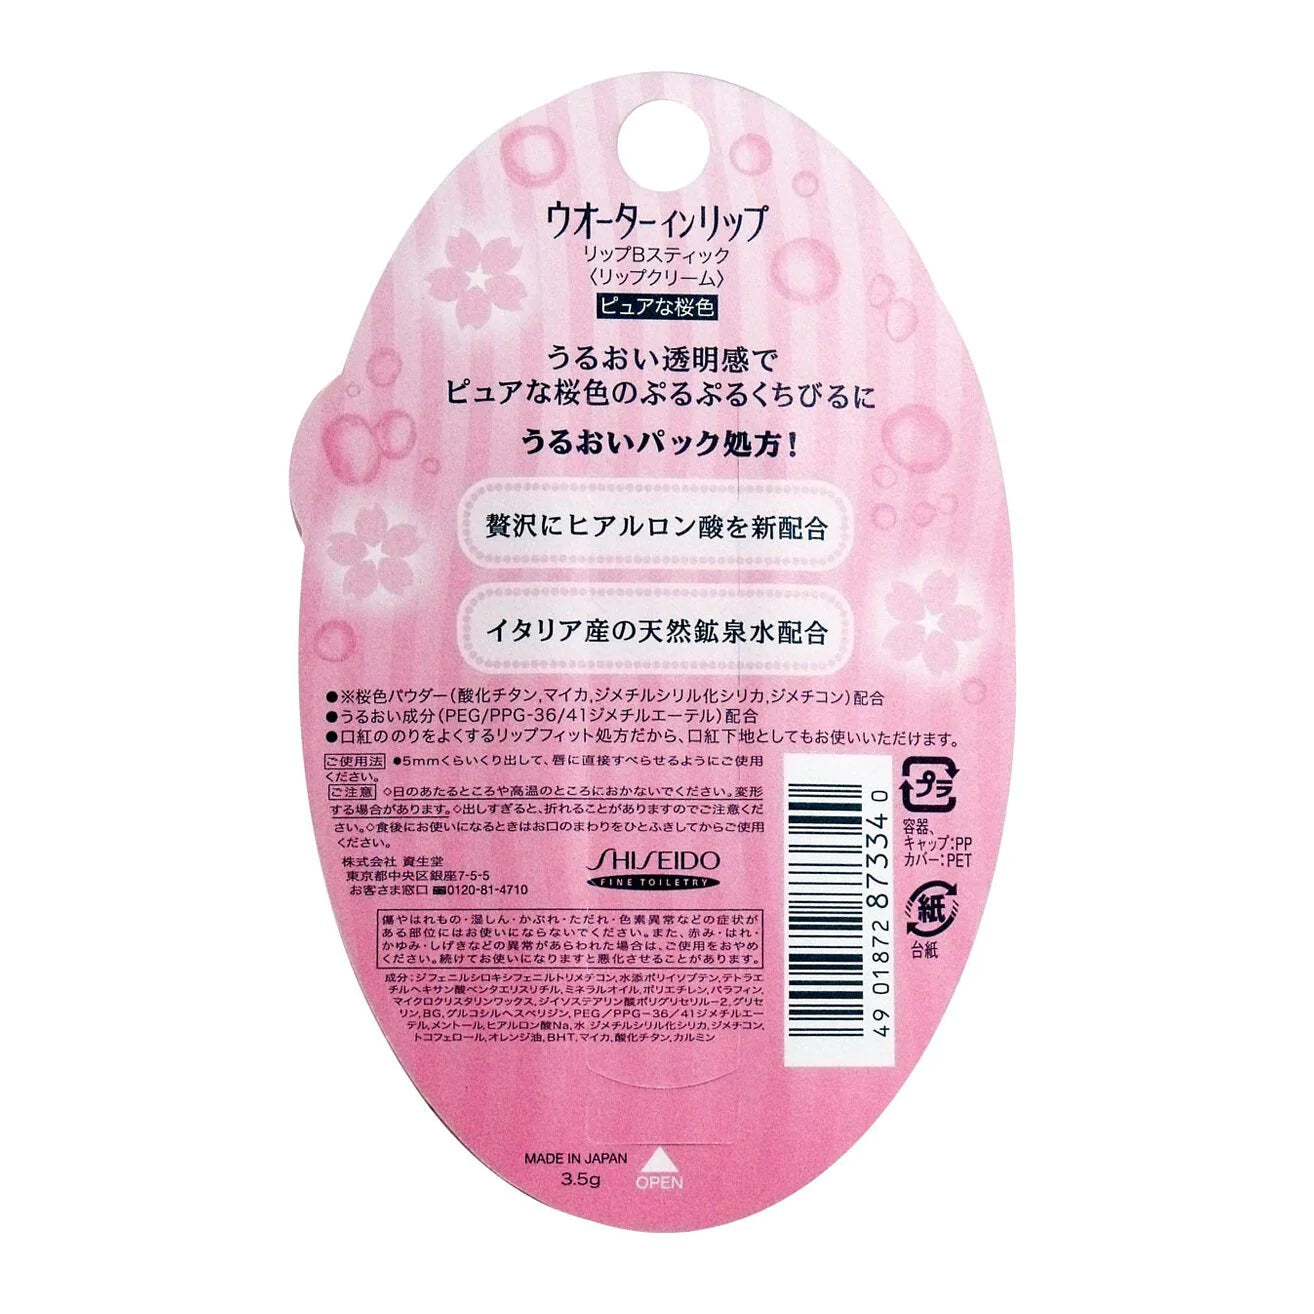 Shiseido Water In Lip Balm Sakura 3.5g